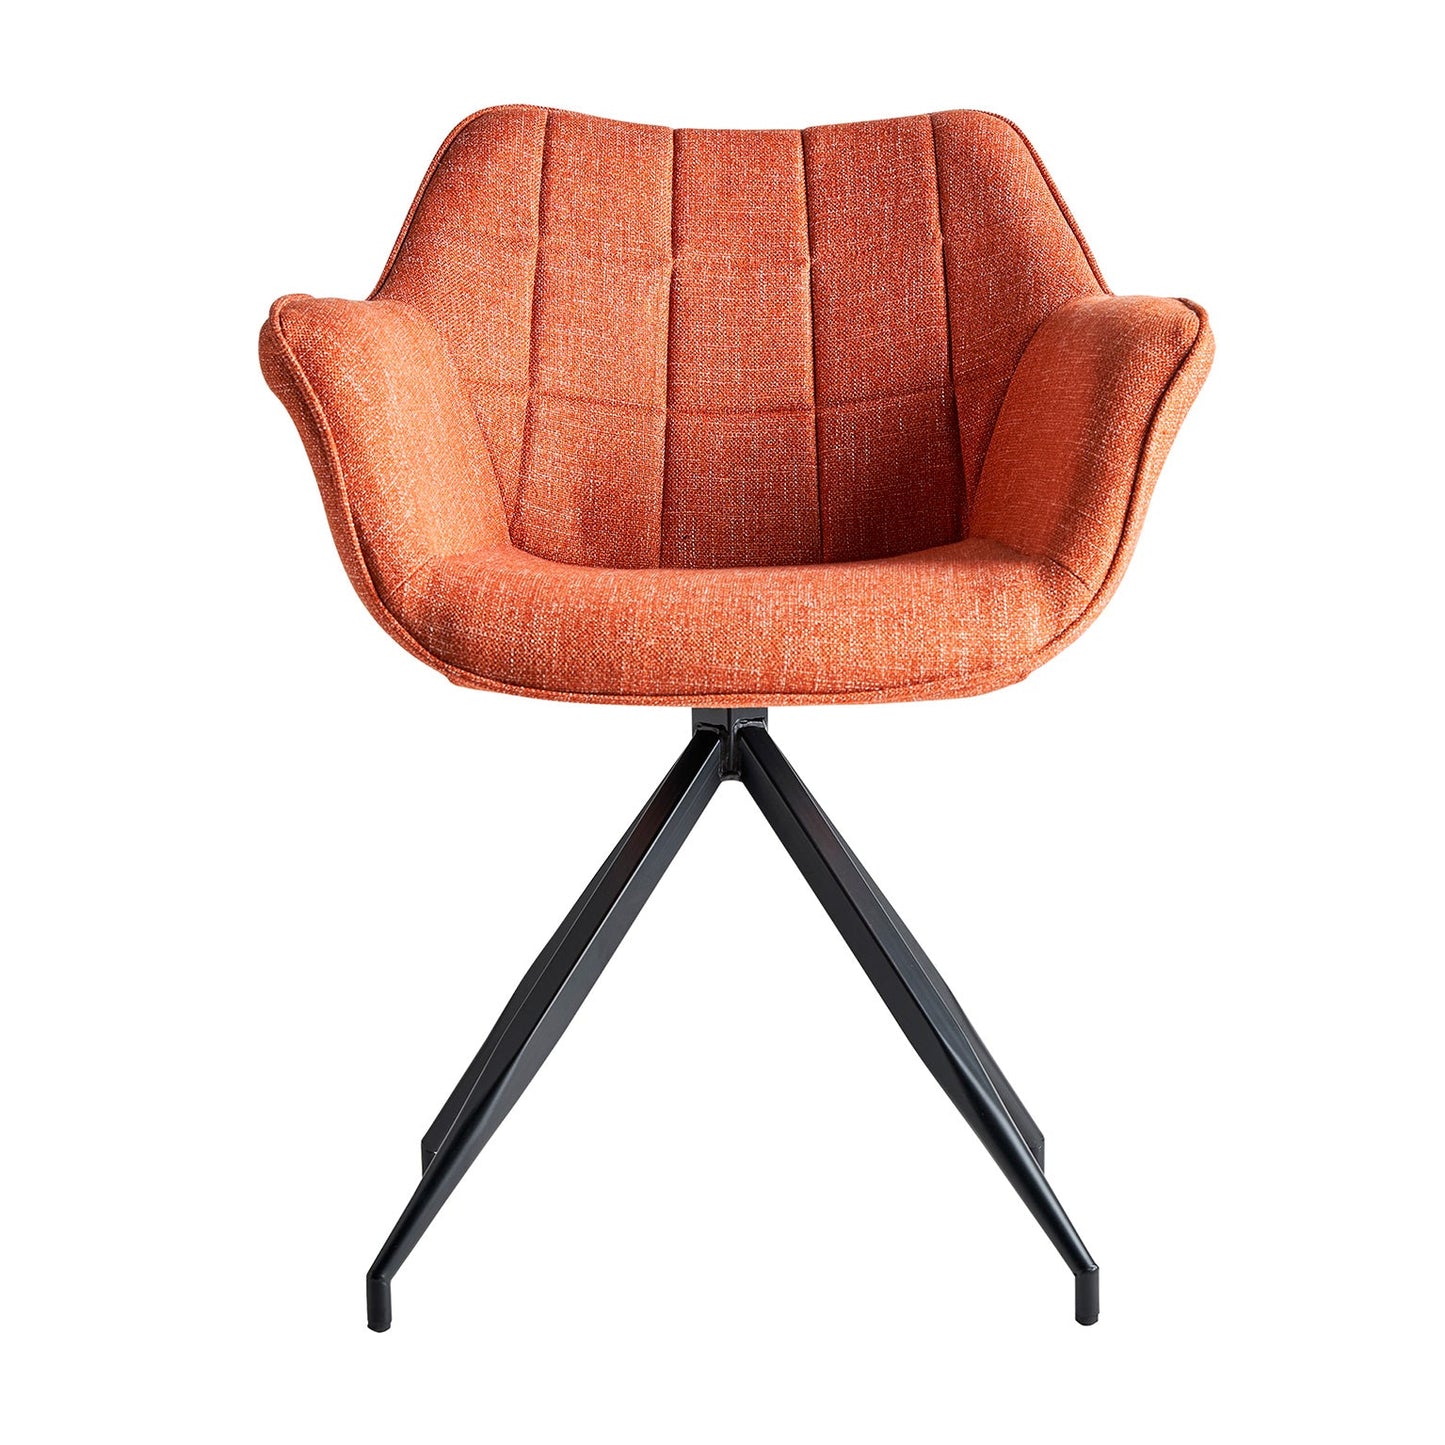 Osidda Chair in Orange Colour